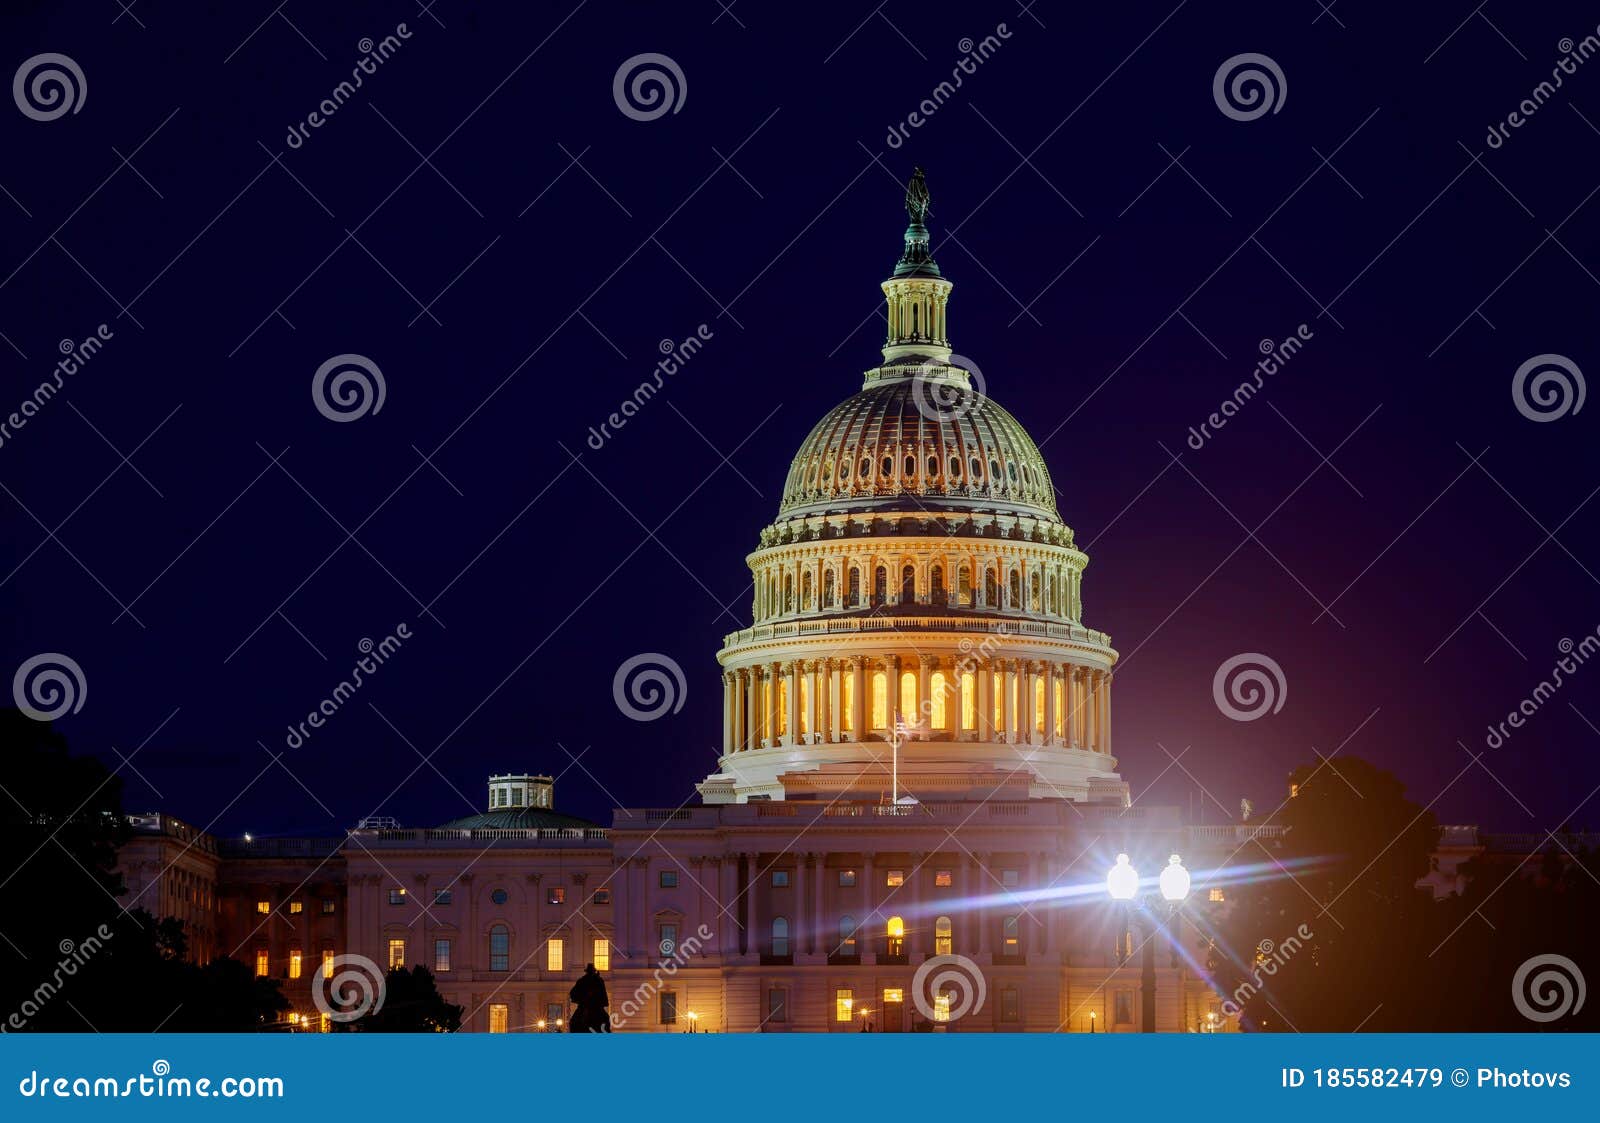 united states capitol and the senate building, washington dc usa at night